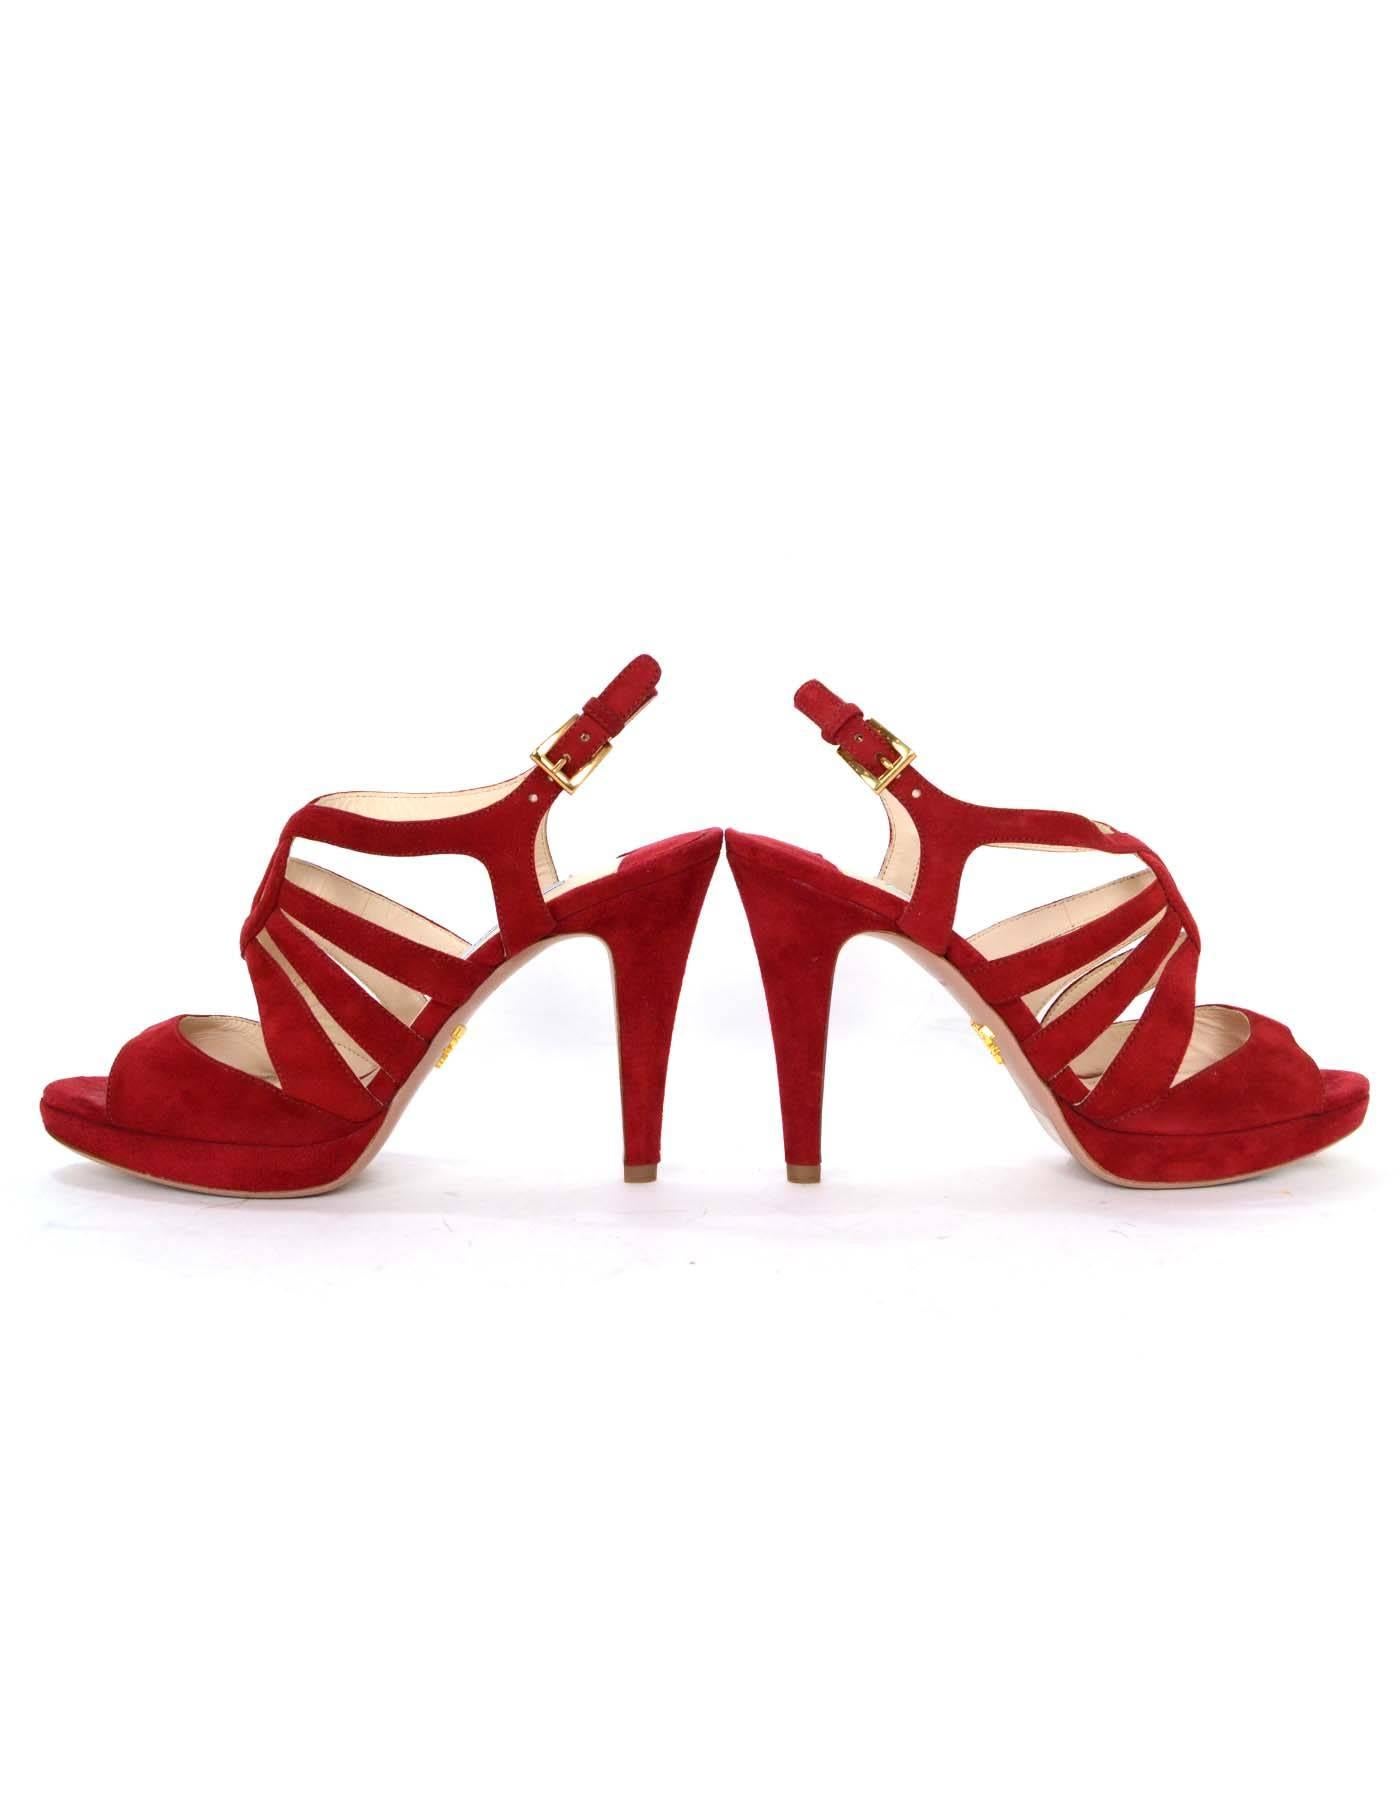 Prada Red Suede Strappy Sandals sz 38 2